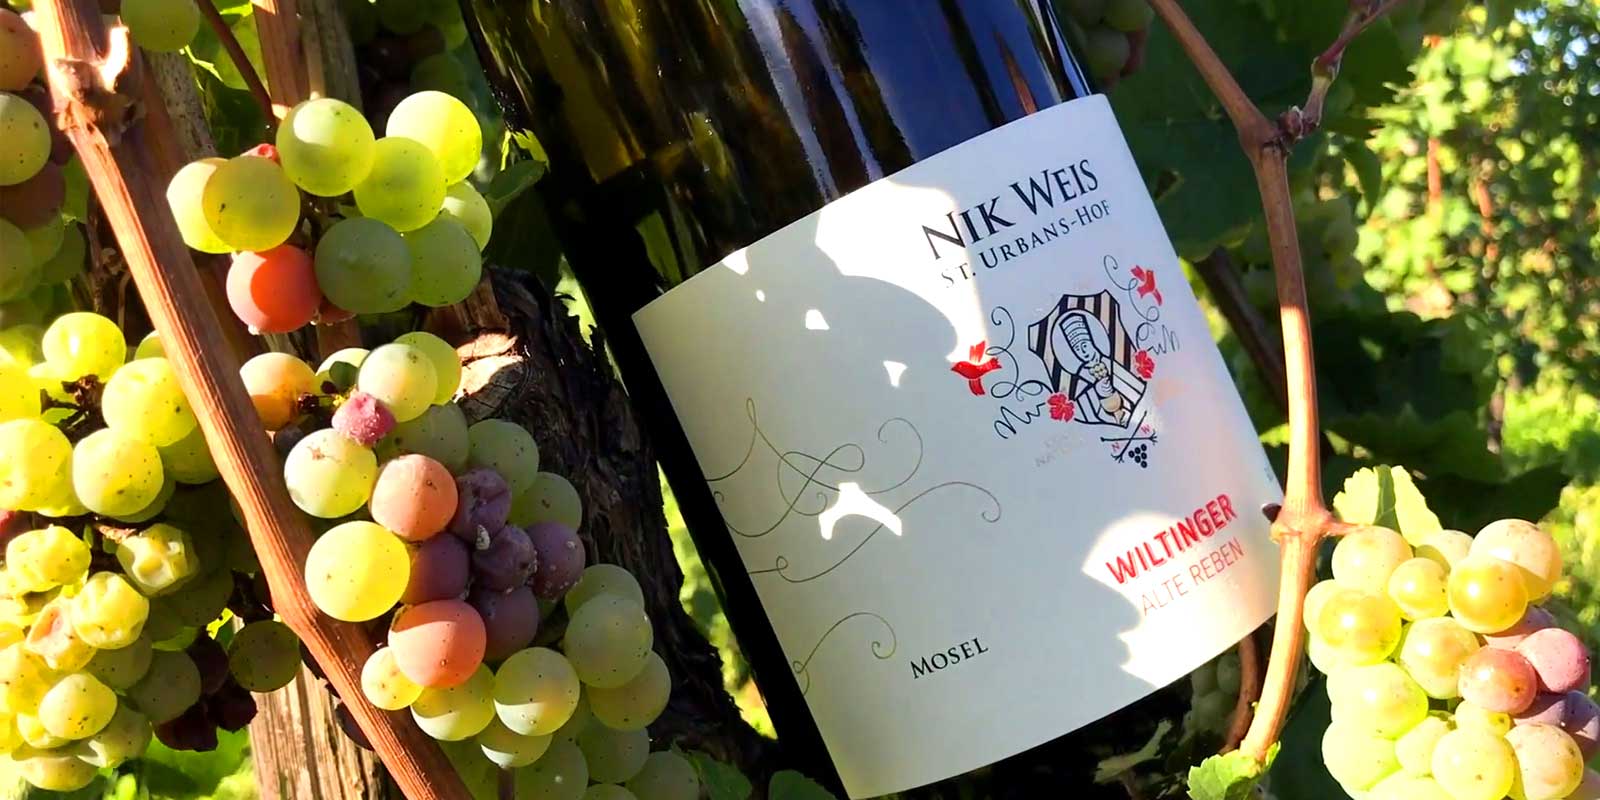 Pabrik anggur Sankt Urbans-Hof - Moselle Pabrik anggur St. Urbans-Hof didirikan pada tahun 1947 oleh Nicolaus Weis. Cucunya, Nik Weis, kini menjadi generasi ketiga yang menjalankan kilang anggur tersebut.